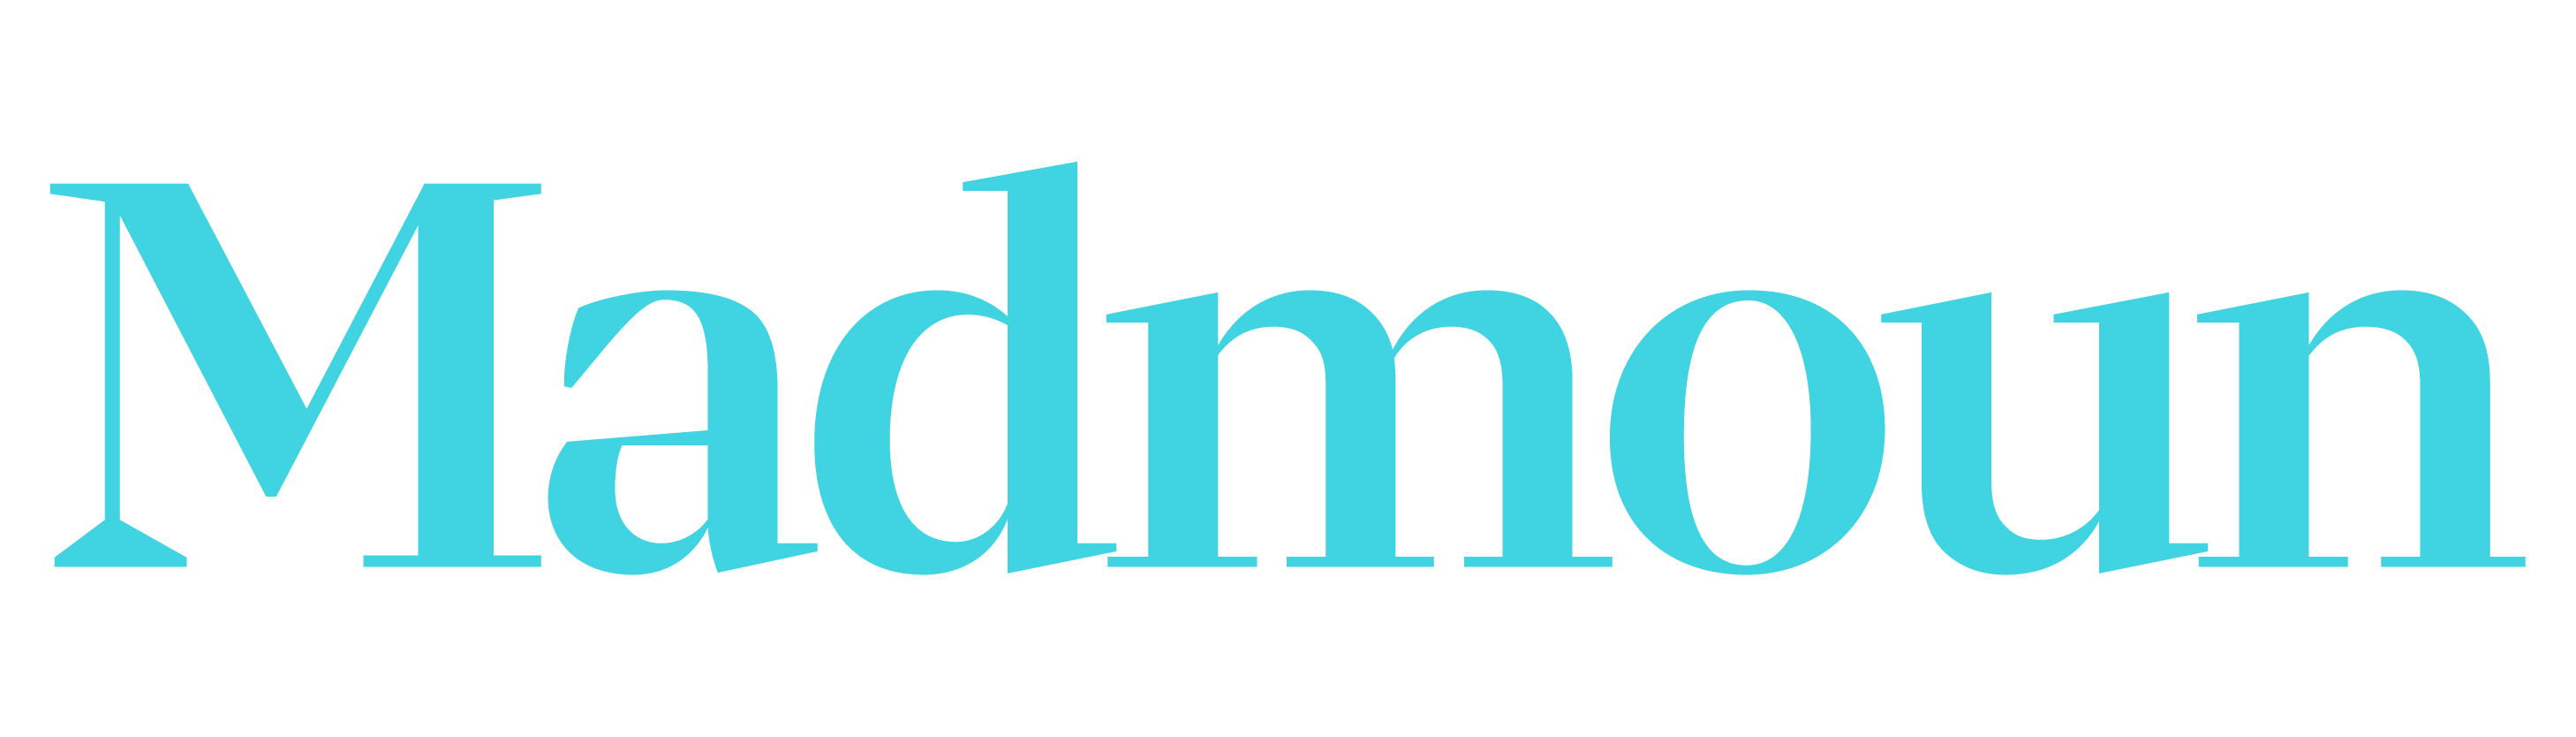 madmoon-logo